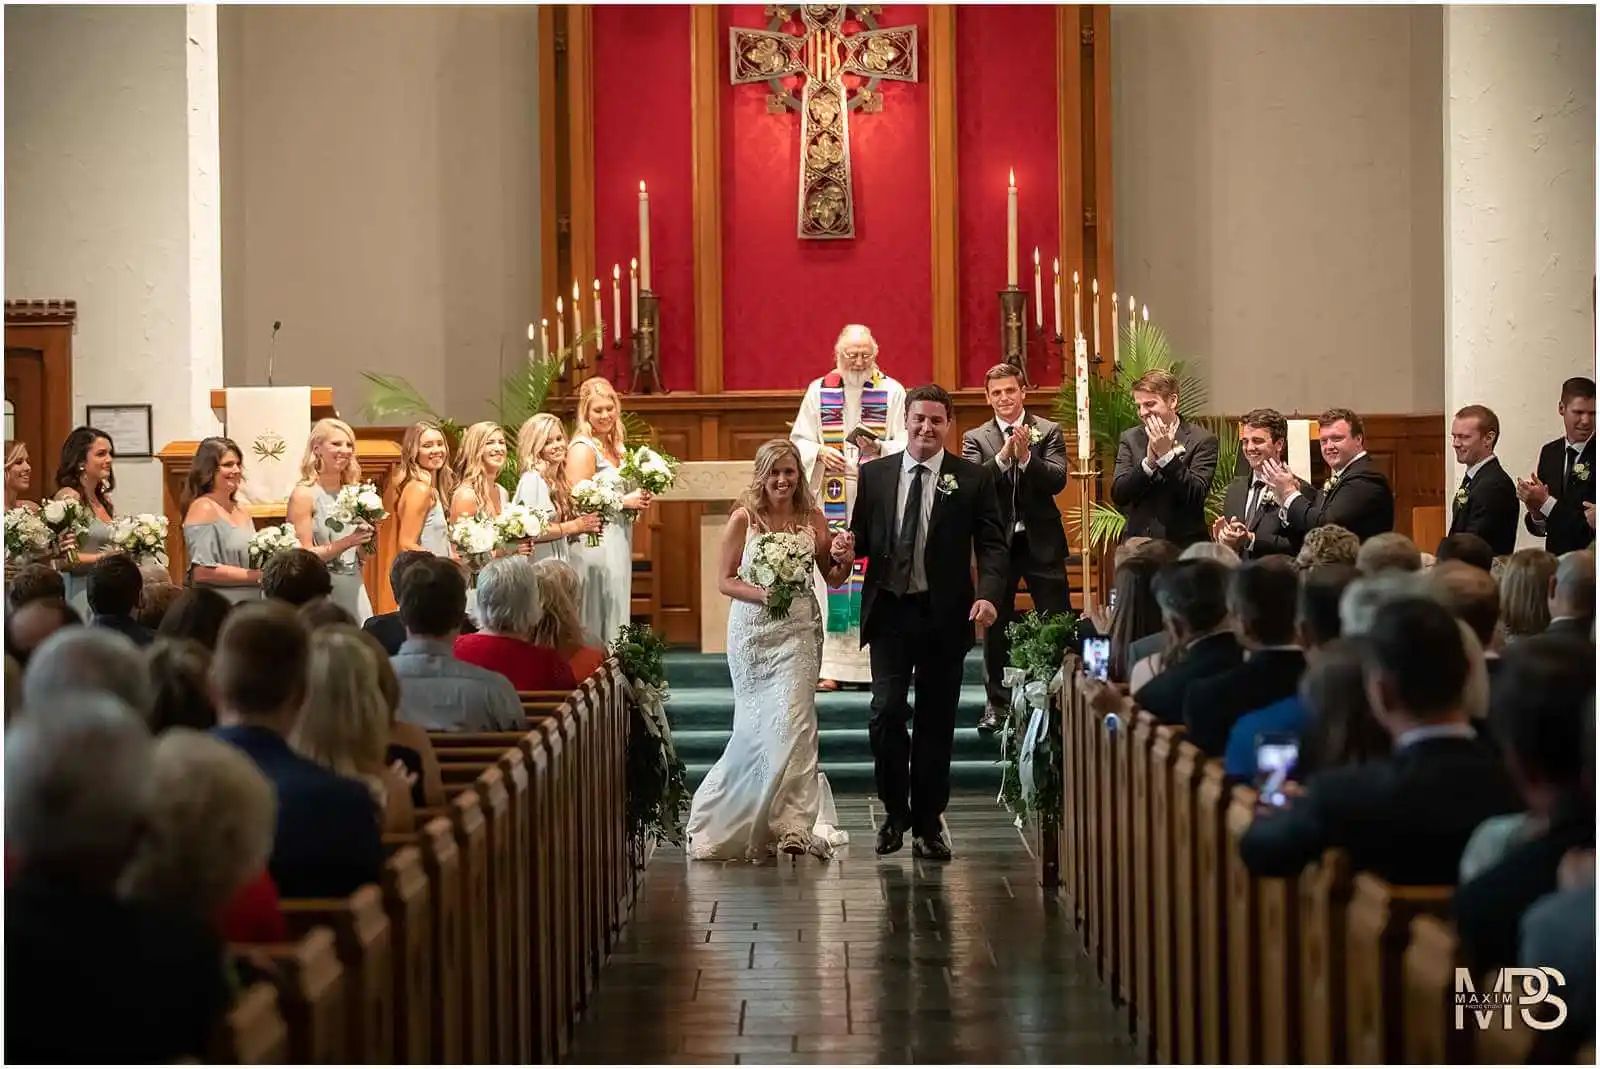 Cincinnati Knox Presbyterian Church Wedding Ceremony Pt